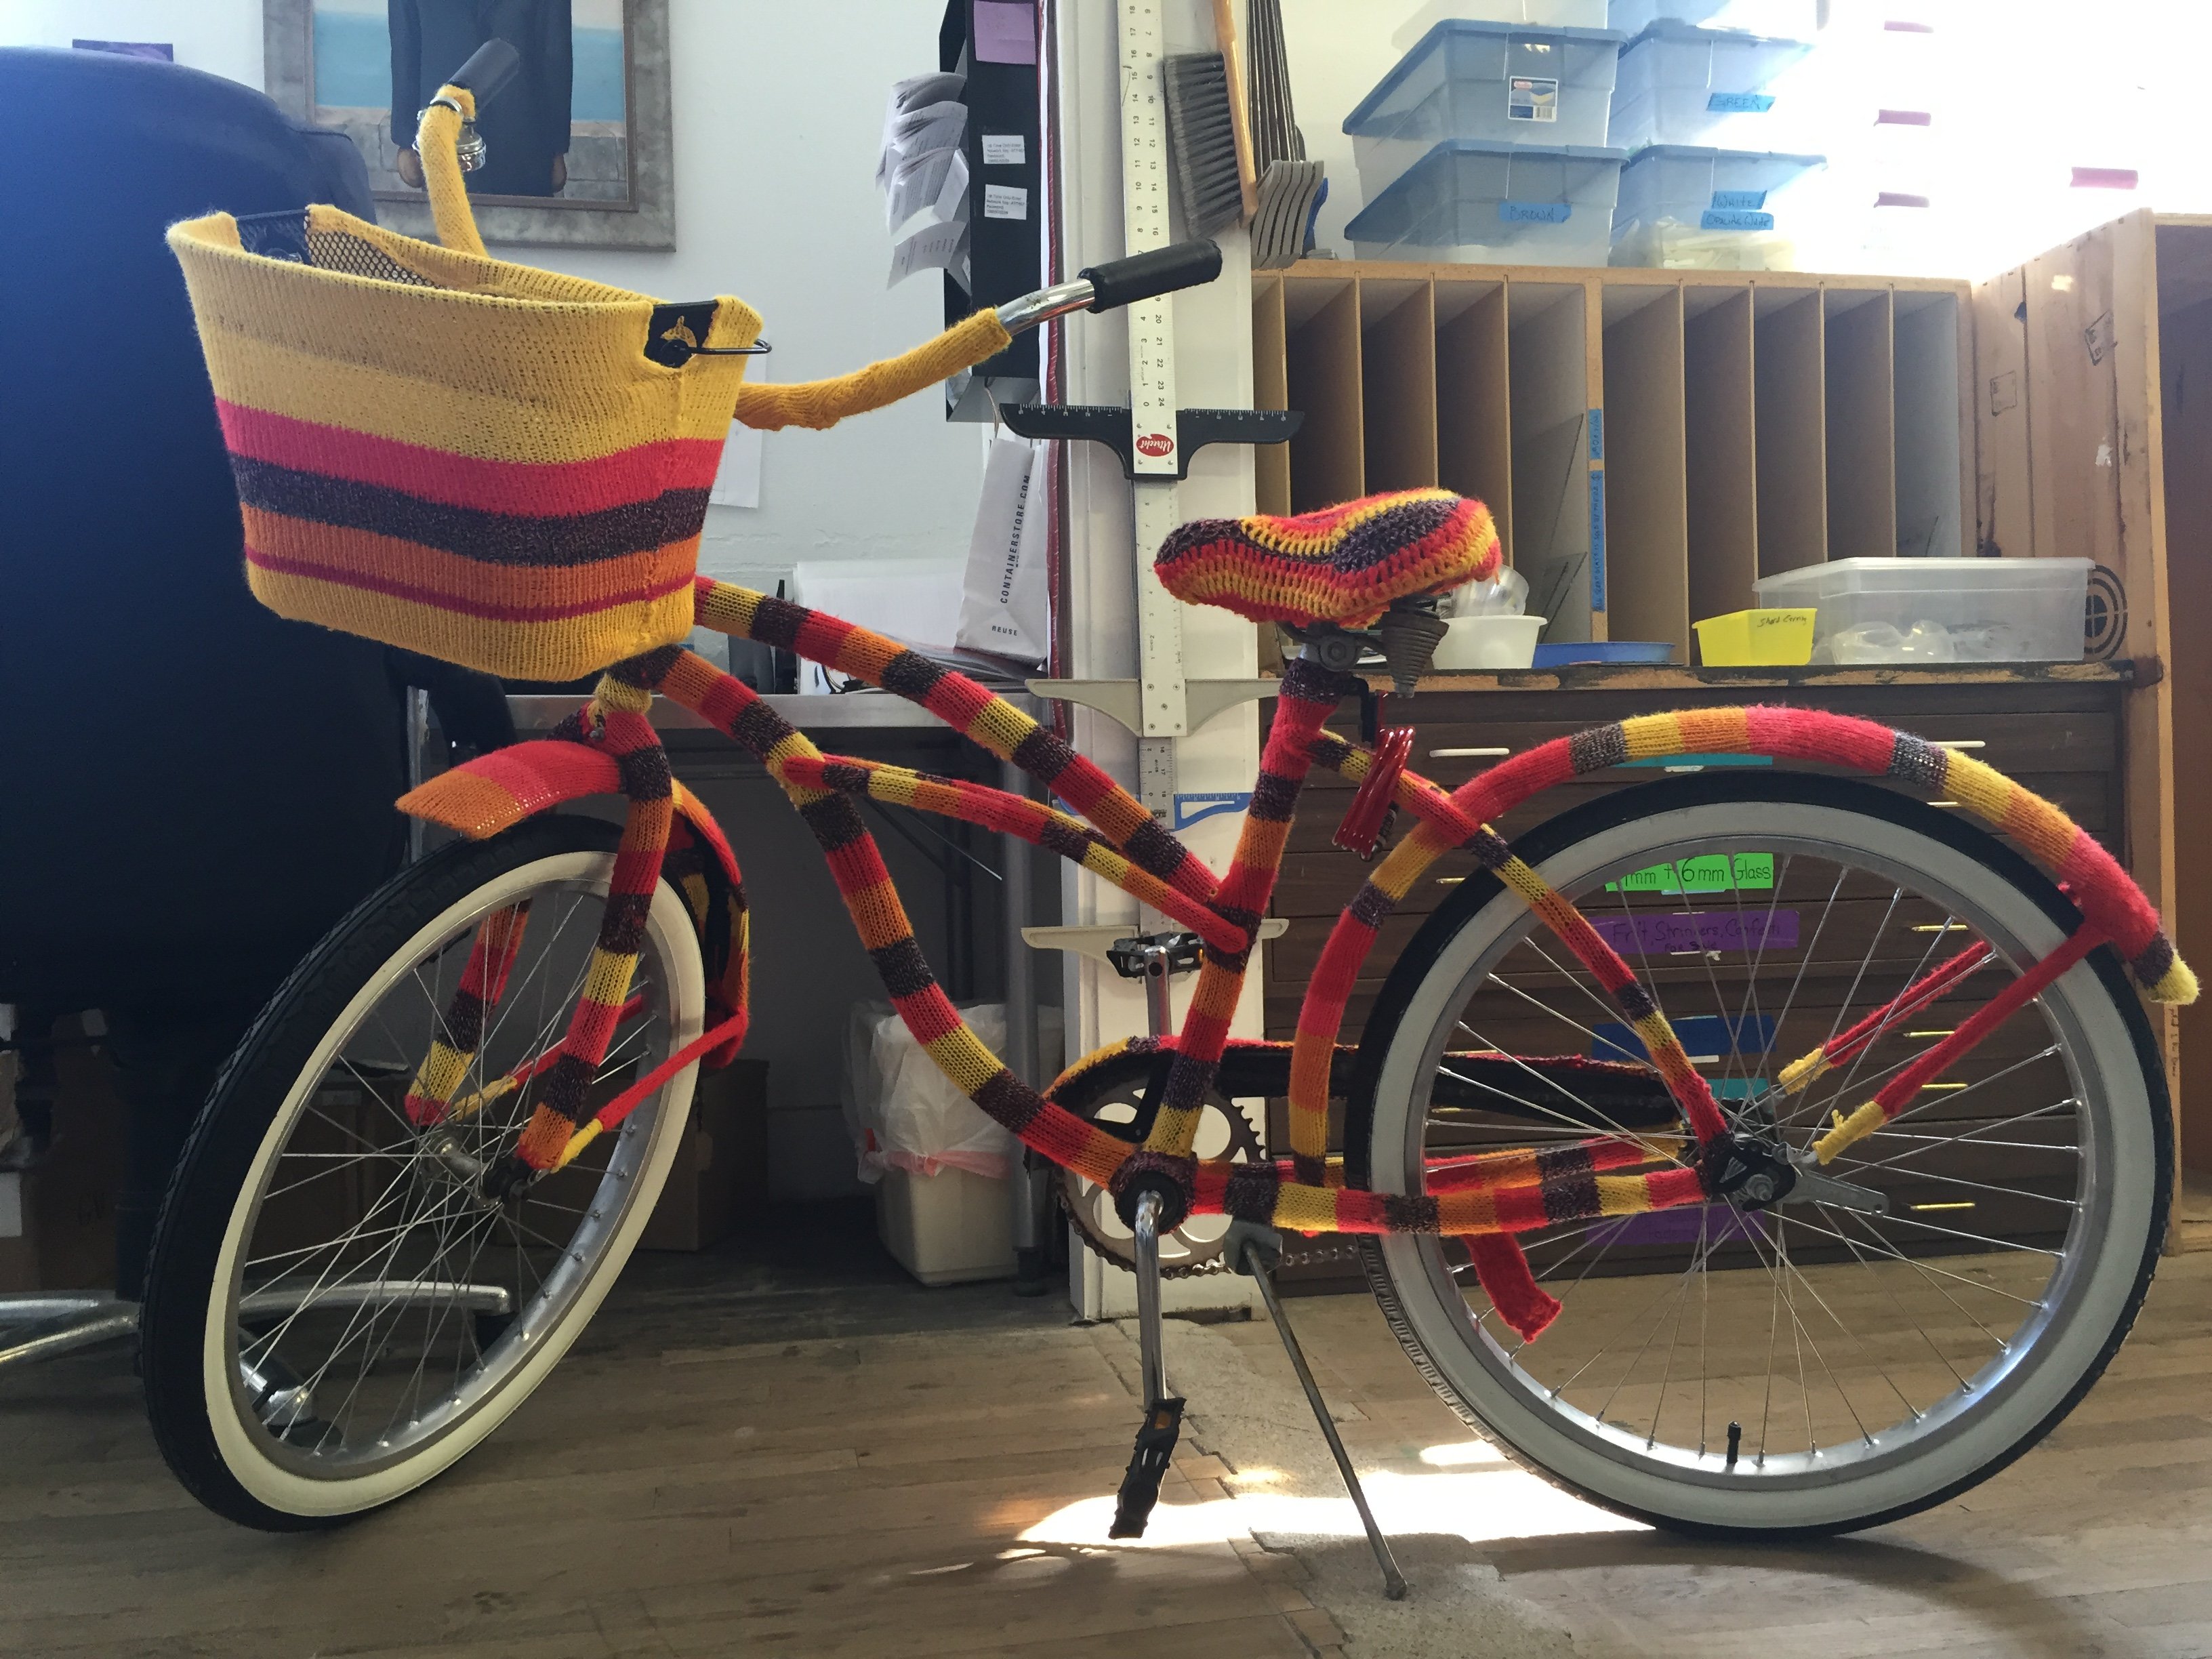 Yarn-bombed bike, Creative Arts Center of Dallas.